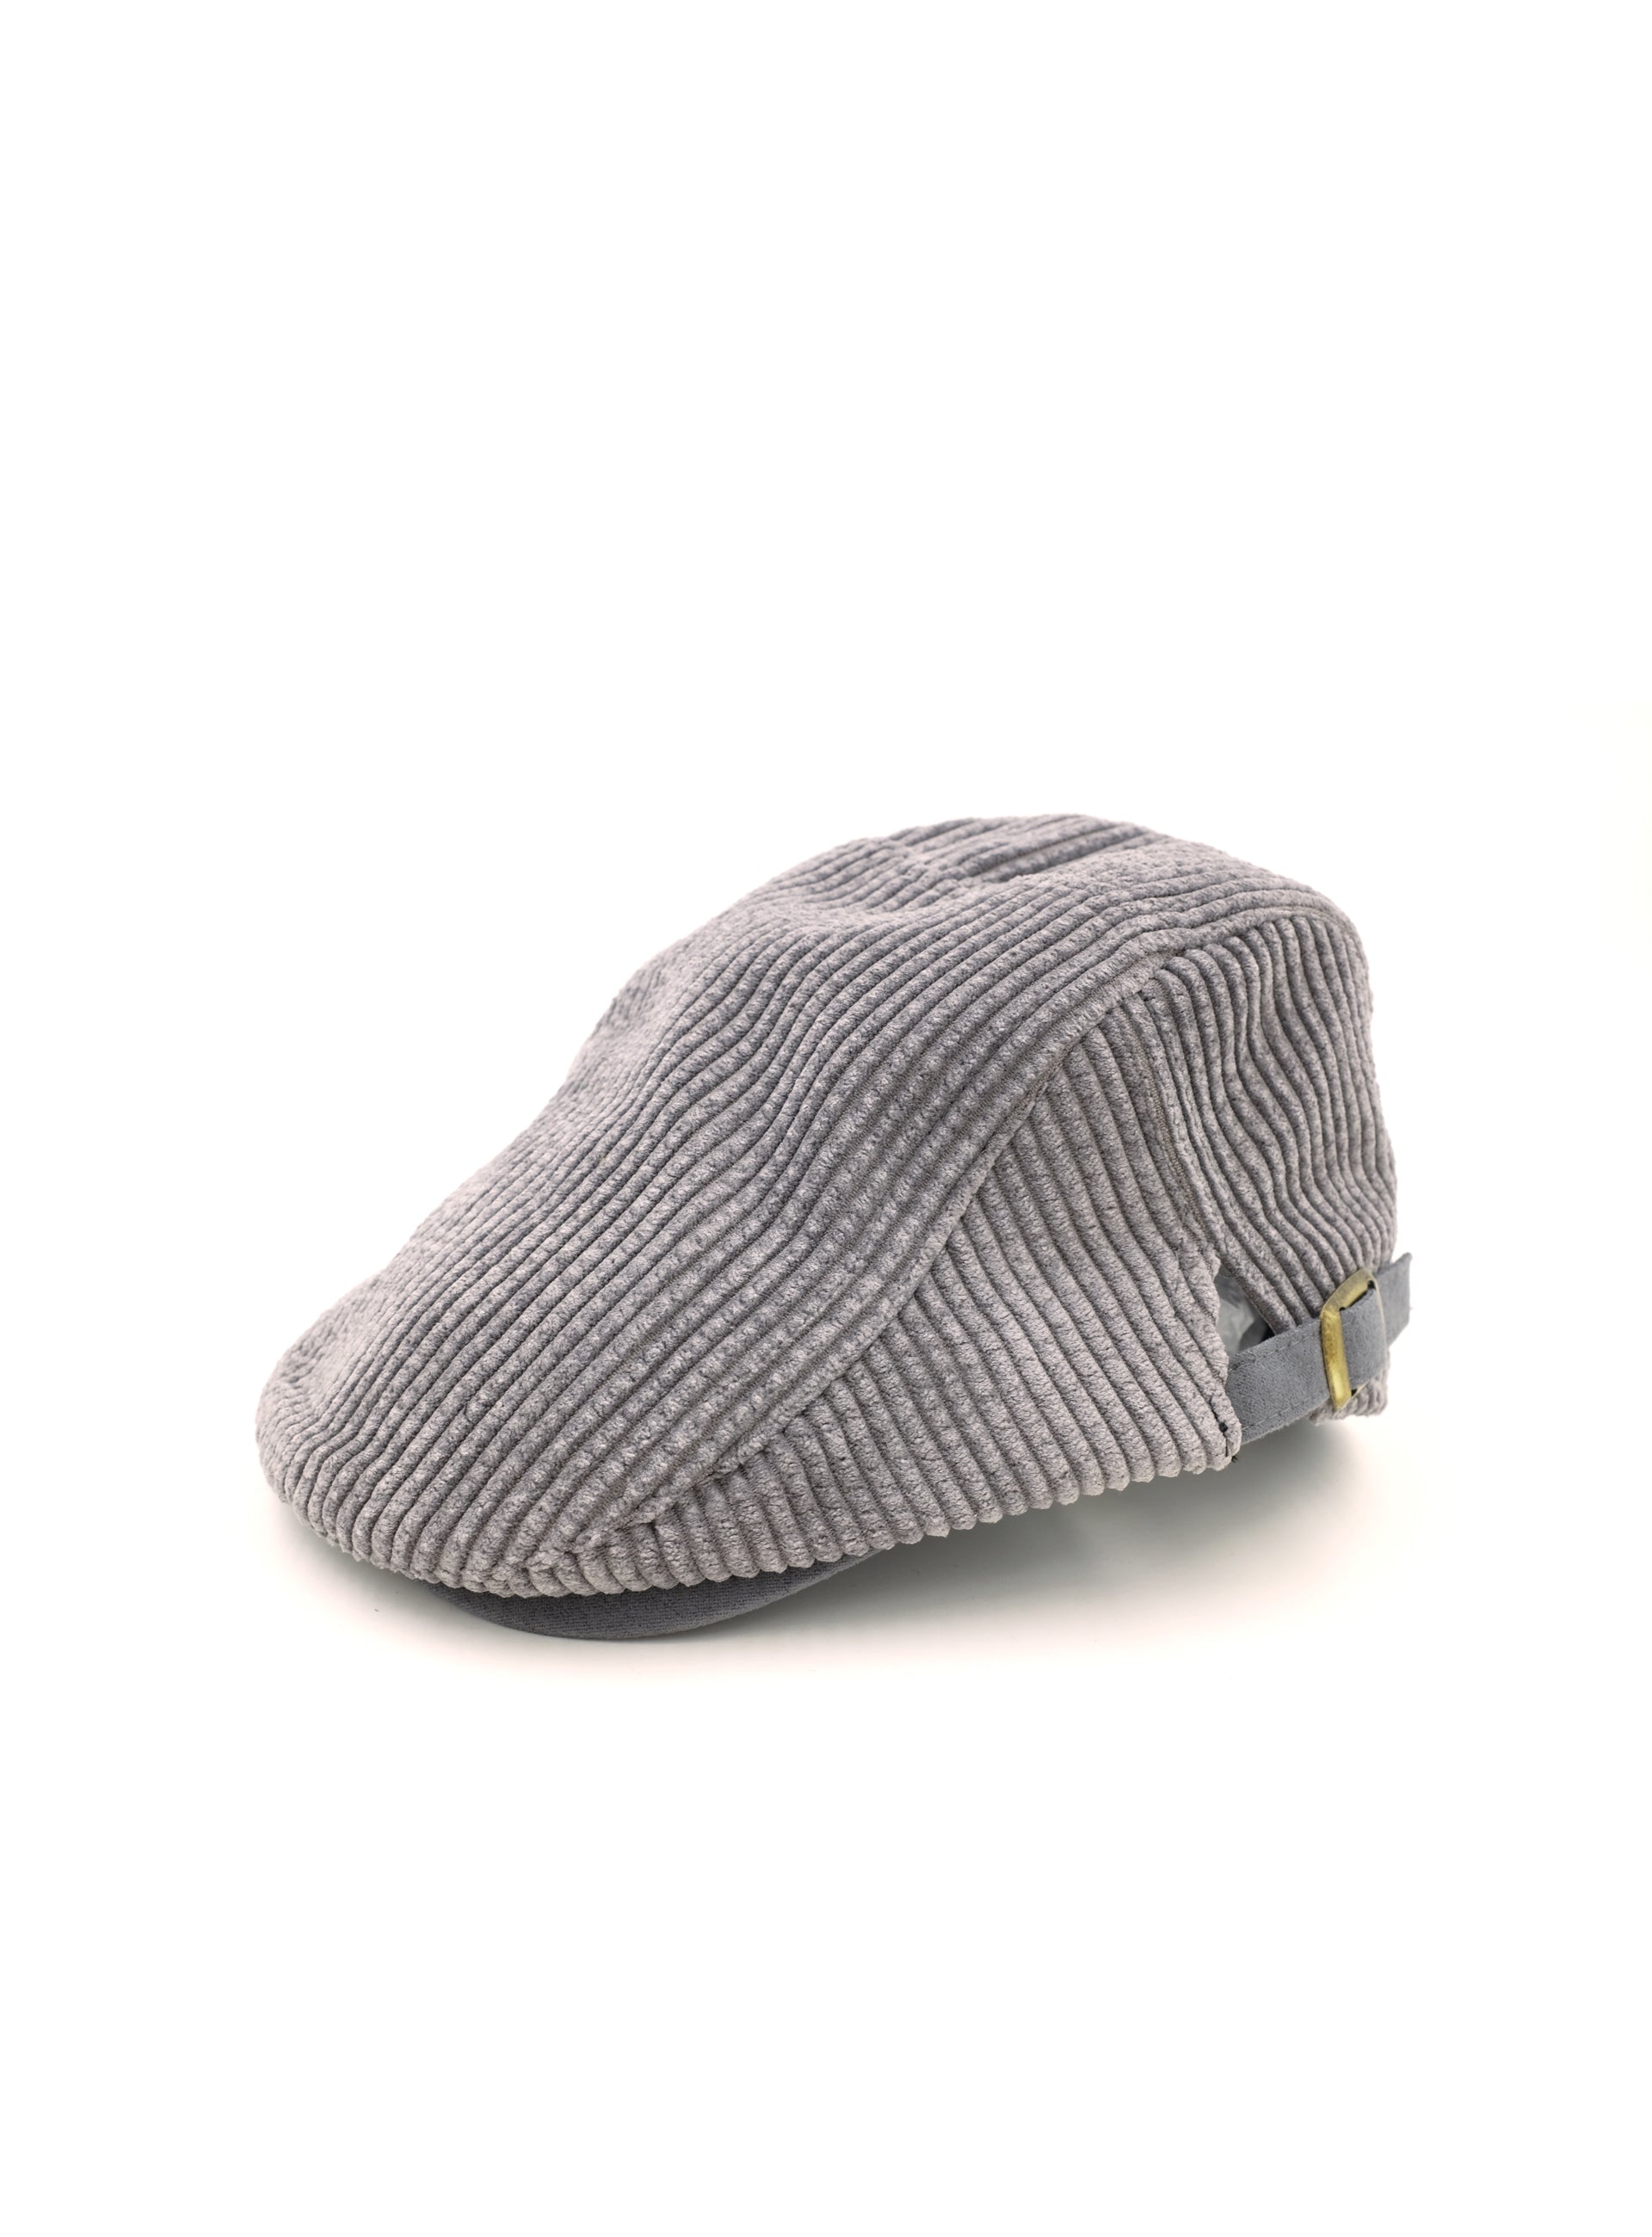 sandstone gray corduroy flat cap